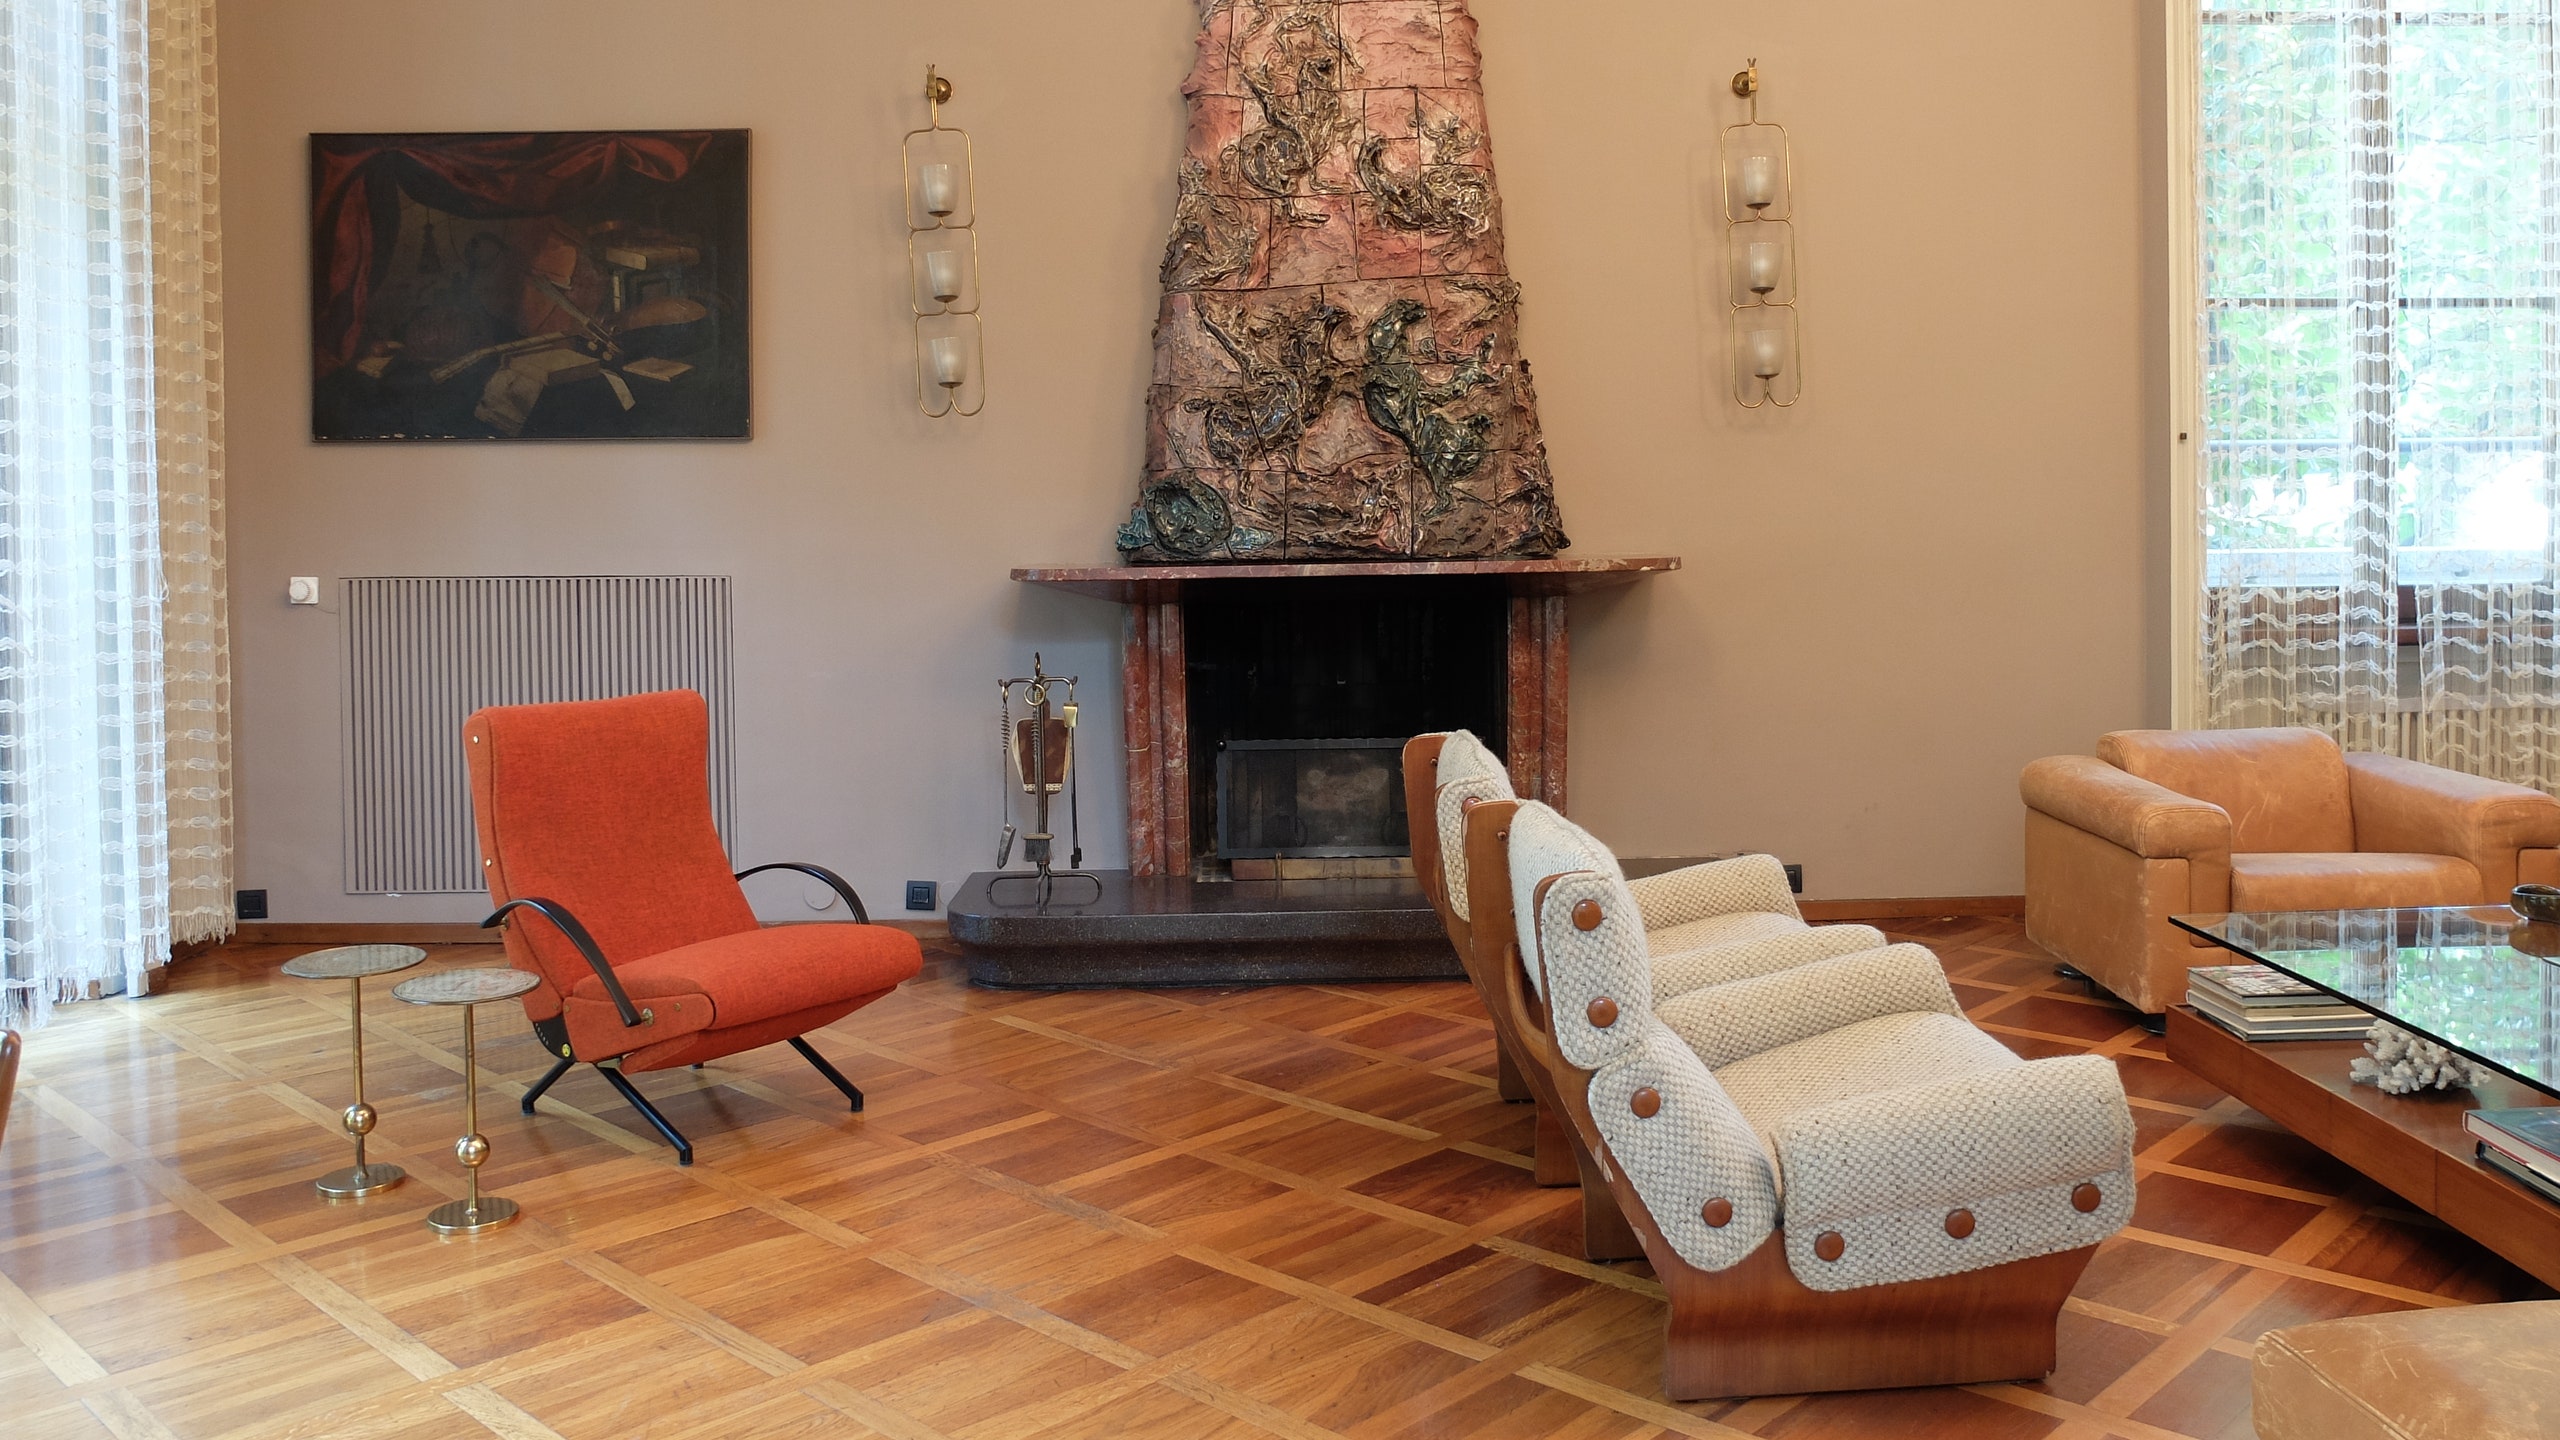 Fireplace by Lucio Fontana and lighting by Guglielmo Ulrich